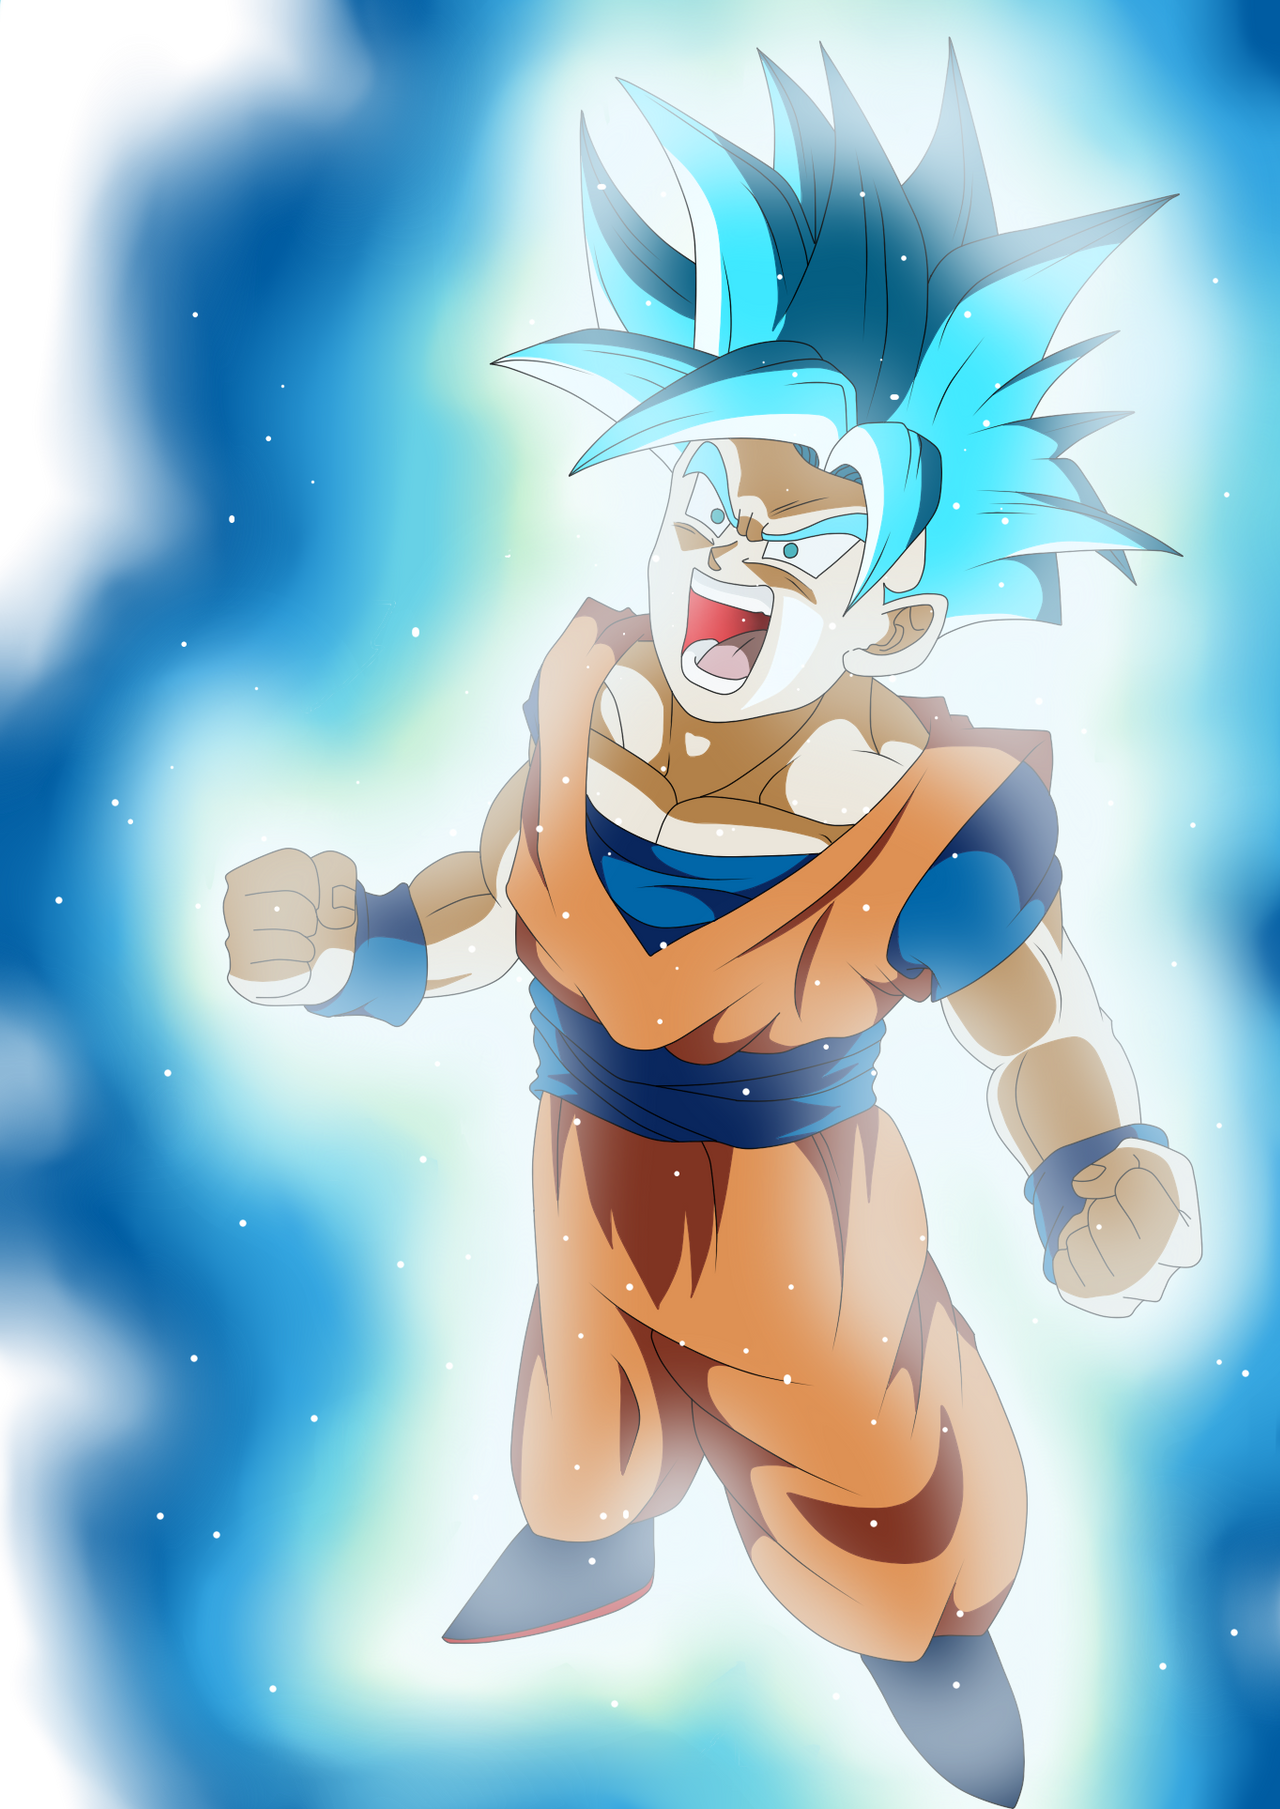 Goku Super Saiyan 2 by TheOneNimbus on DeviantArt